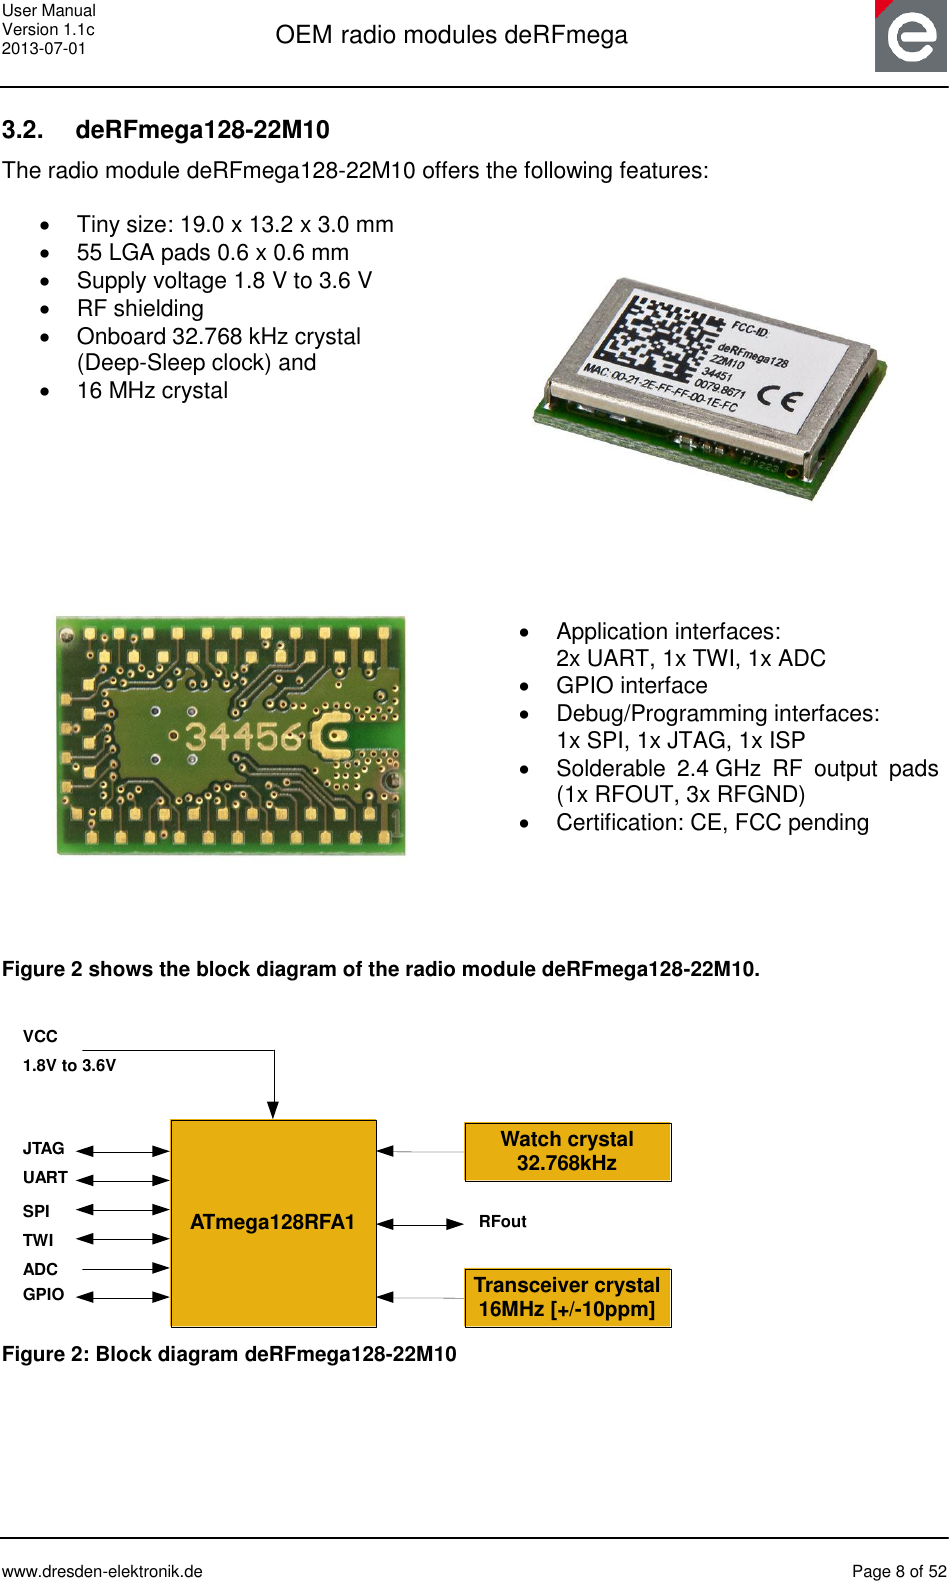 User Manual Version 1.1c 2013-07-01  OEM radio modules deRFmega      www.dresden-elektronik.de  Page 8 of 52  3.2.  deRFmega128-22M10 The radio module deRFmega128-22M10 offers the following features:    Tiny size: 19.0 x 13.2 x 3.0 mm  55 LGA pads 0.6 x 0.6 mm   Supply voltage 1.8 V to 3.6 V   RF shielding   Onboard 32.768 kHz crystal  (Deep-Sleep clock) and   16 MHz crystal       Application interfaces:  2x UART, 1x TWI, 1x ADC   GPIO interface   Debug/Programming interfaces:  1x SPI, 1x JTAG, 1x ISP   Solderable  2.4 GHz  RF  output  pads (1x RFOUT, 3x RFGND)  Certification: CE, FCC pending   Figure 2 shows the block diagram of the radio module deRFmega128-22M10.   ATmega128RFA1Transceiver crystal16MHz [+/-10ppm]JTAGUARTVCC1.8V to 3.6VWatch crystal32.768kHzSPITWIADCGPIORFout Figure 2: Block diagram deRFmega128-22M10 